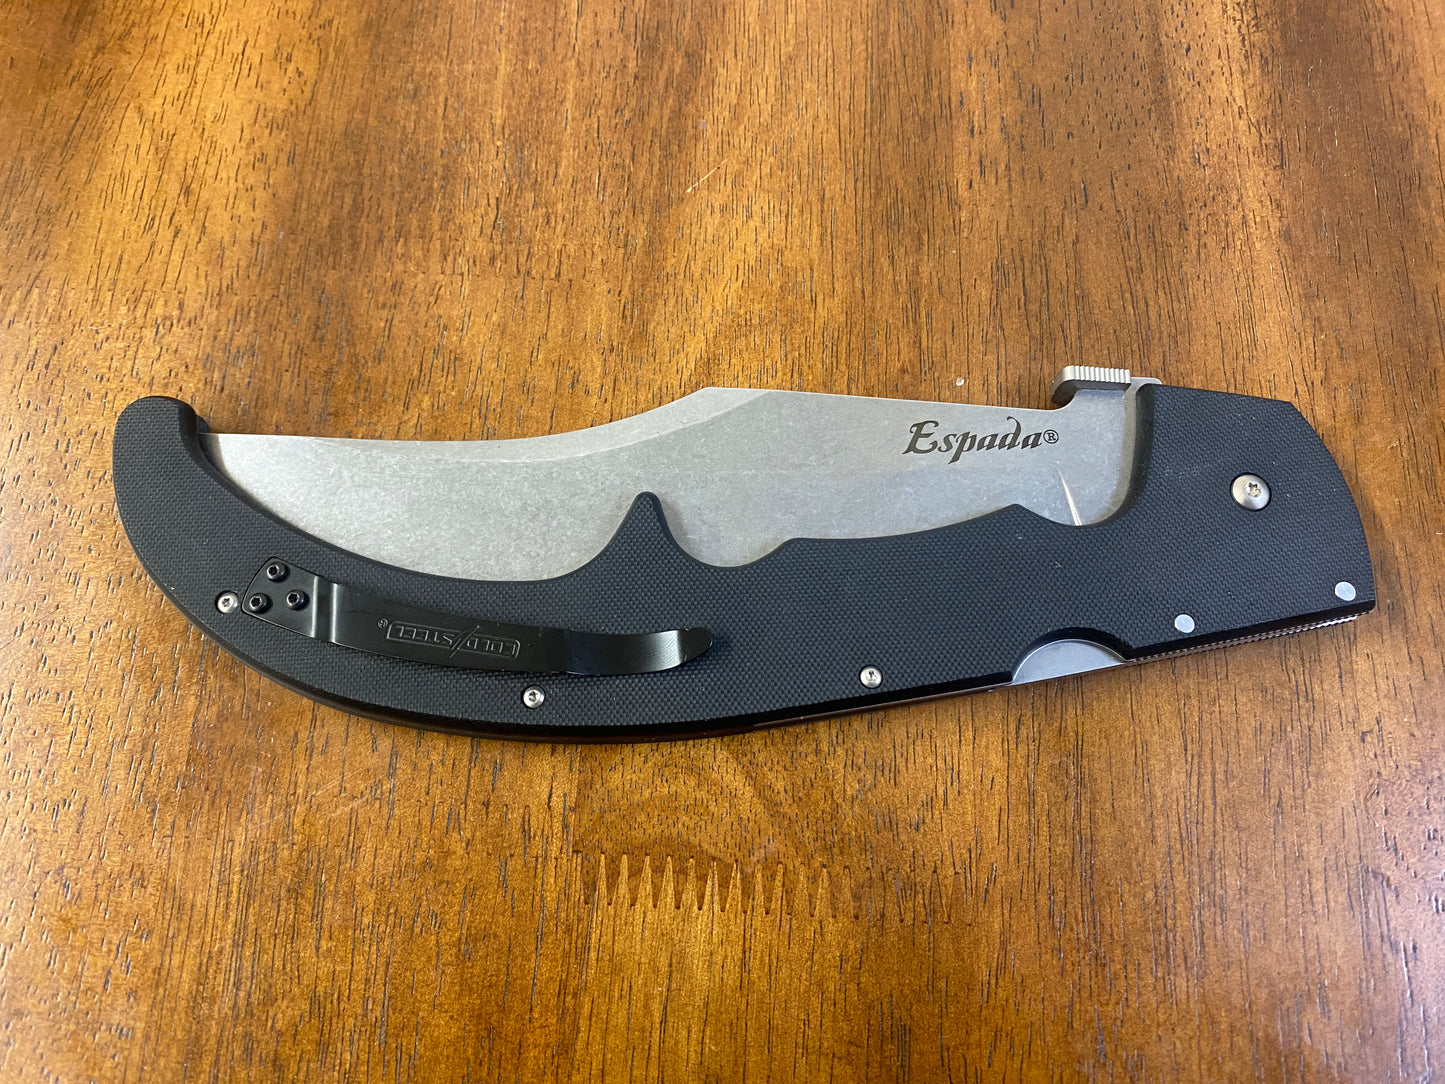 Cold Steel Espada XL Pocket Knife